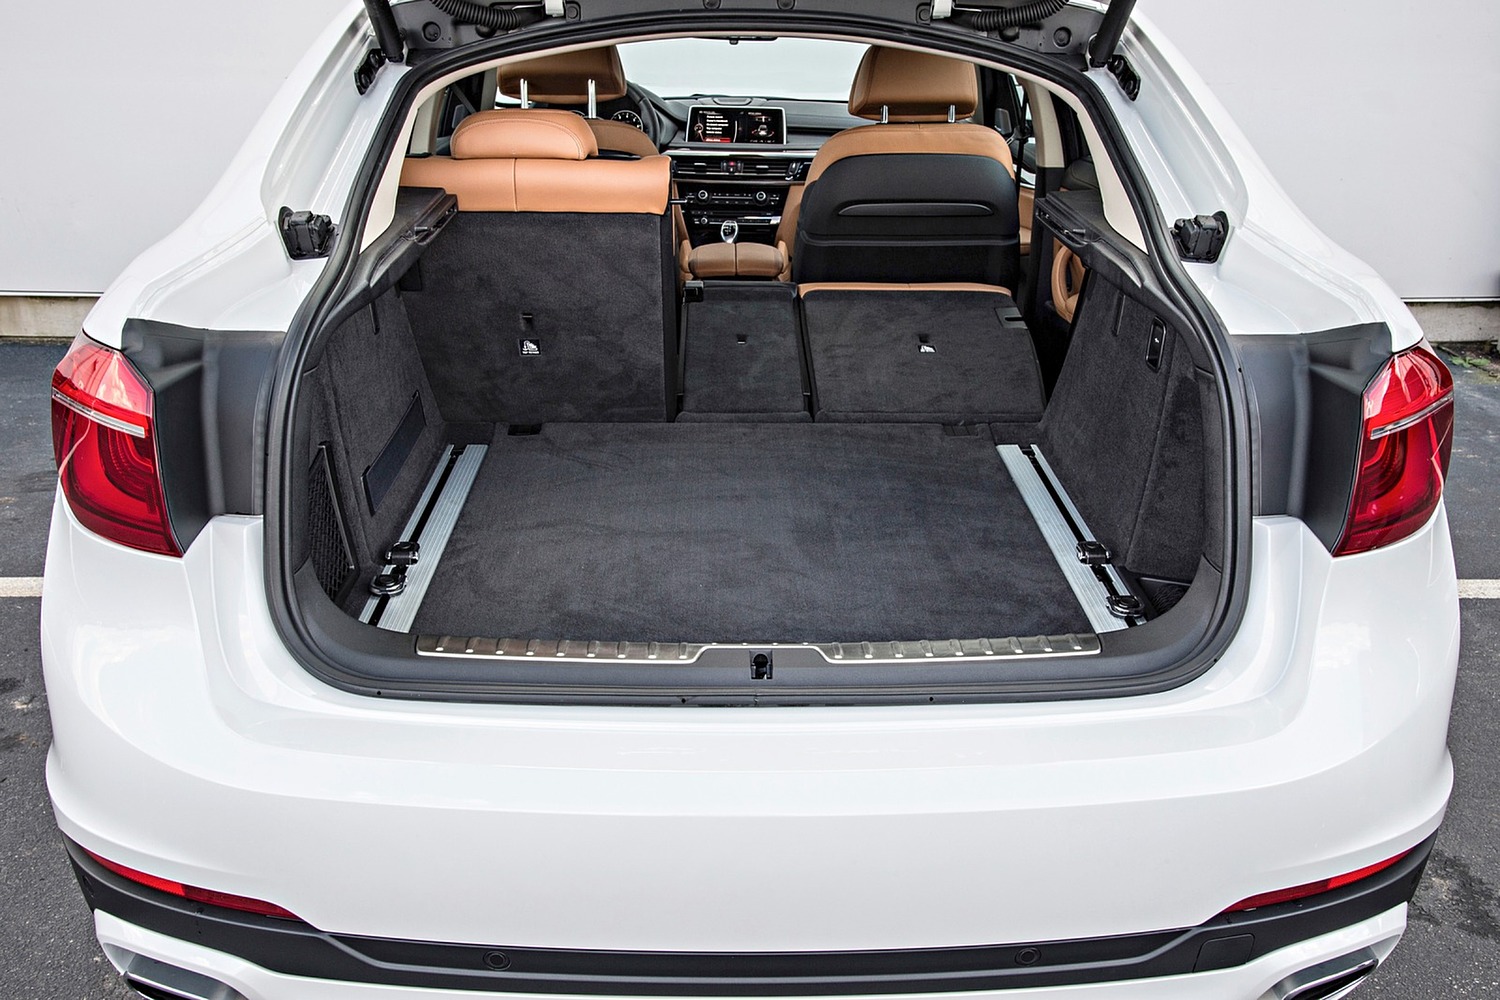 BMW X6 xDrive50i 4dr SUV Interior (2016 model year shown)